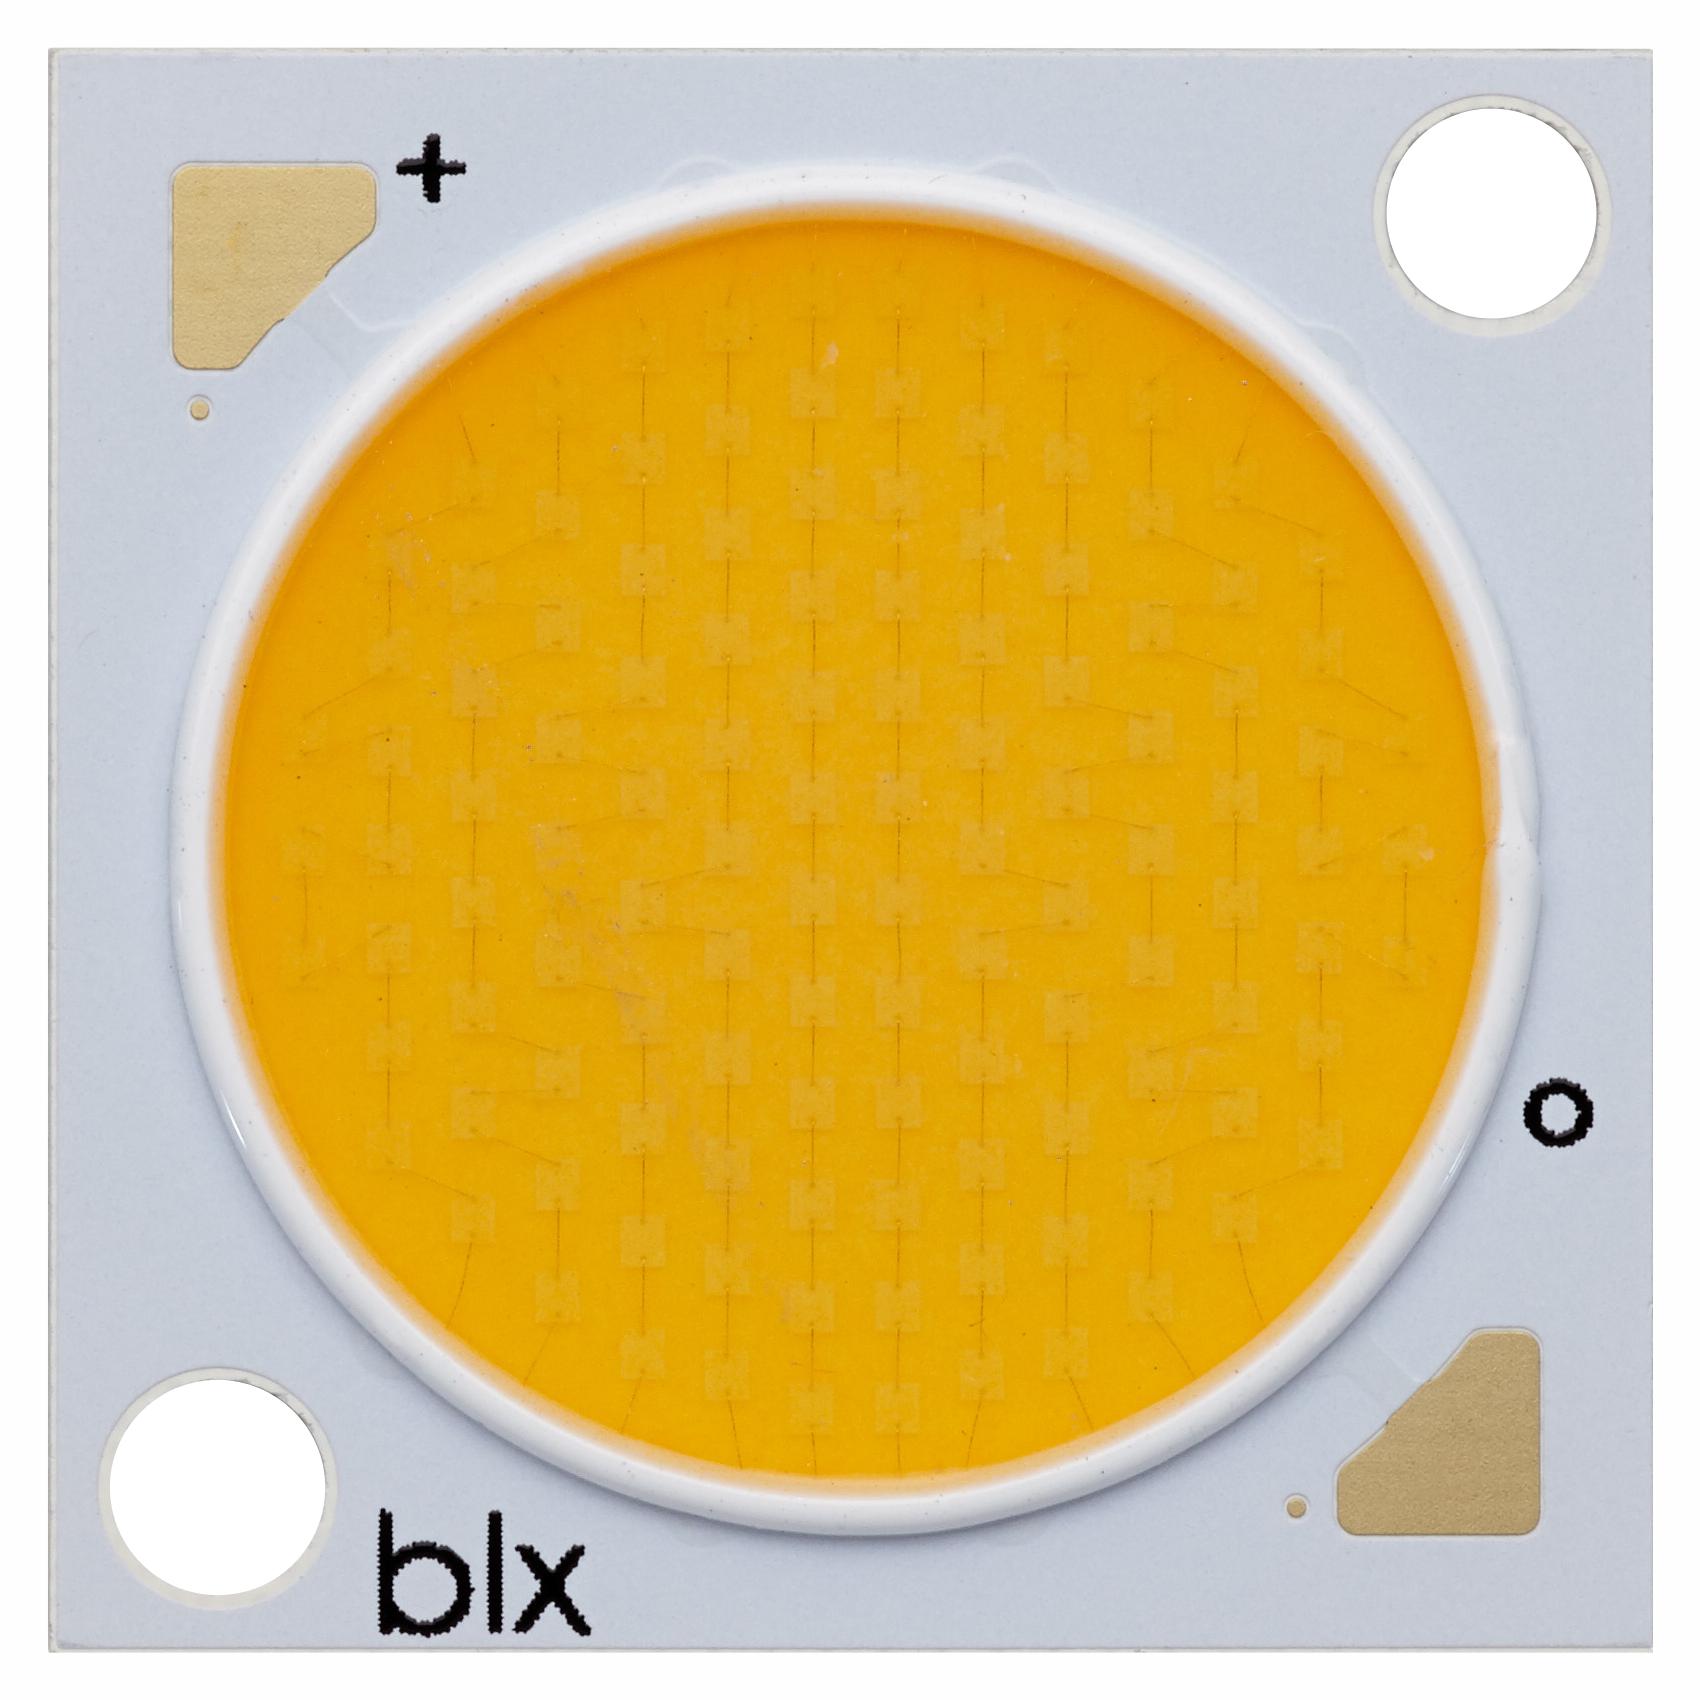 BXRE-57S4001-C-73 COB LED, COOL WHITE, 132LM/W, 5700K BRIDGELUX